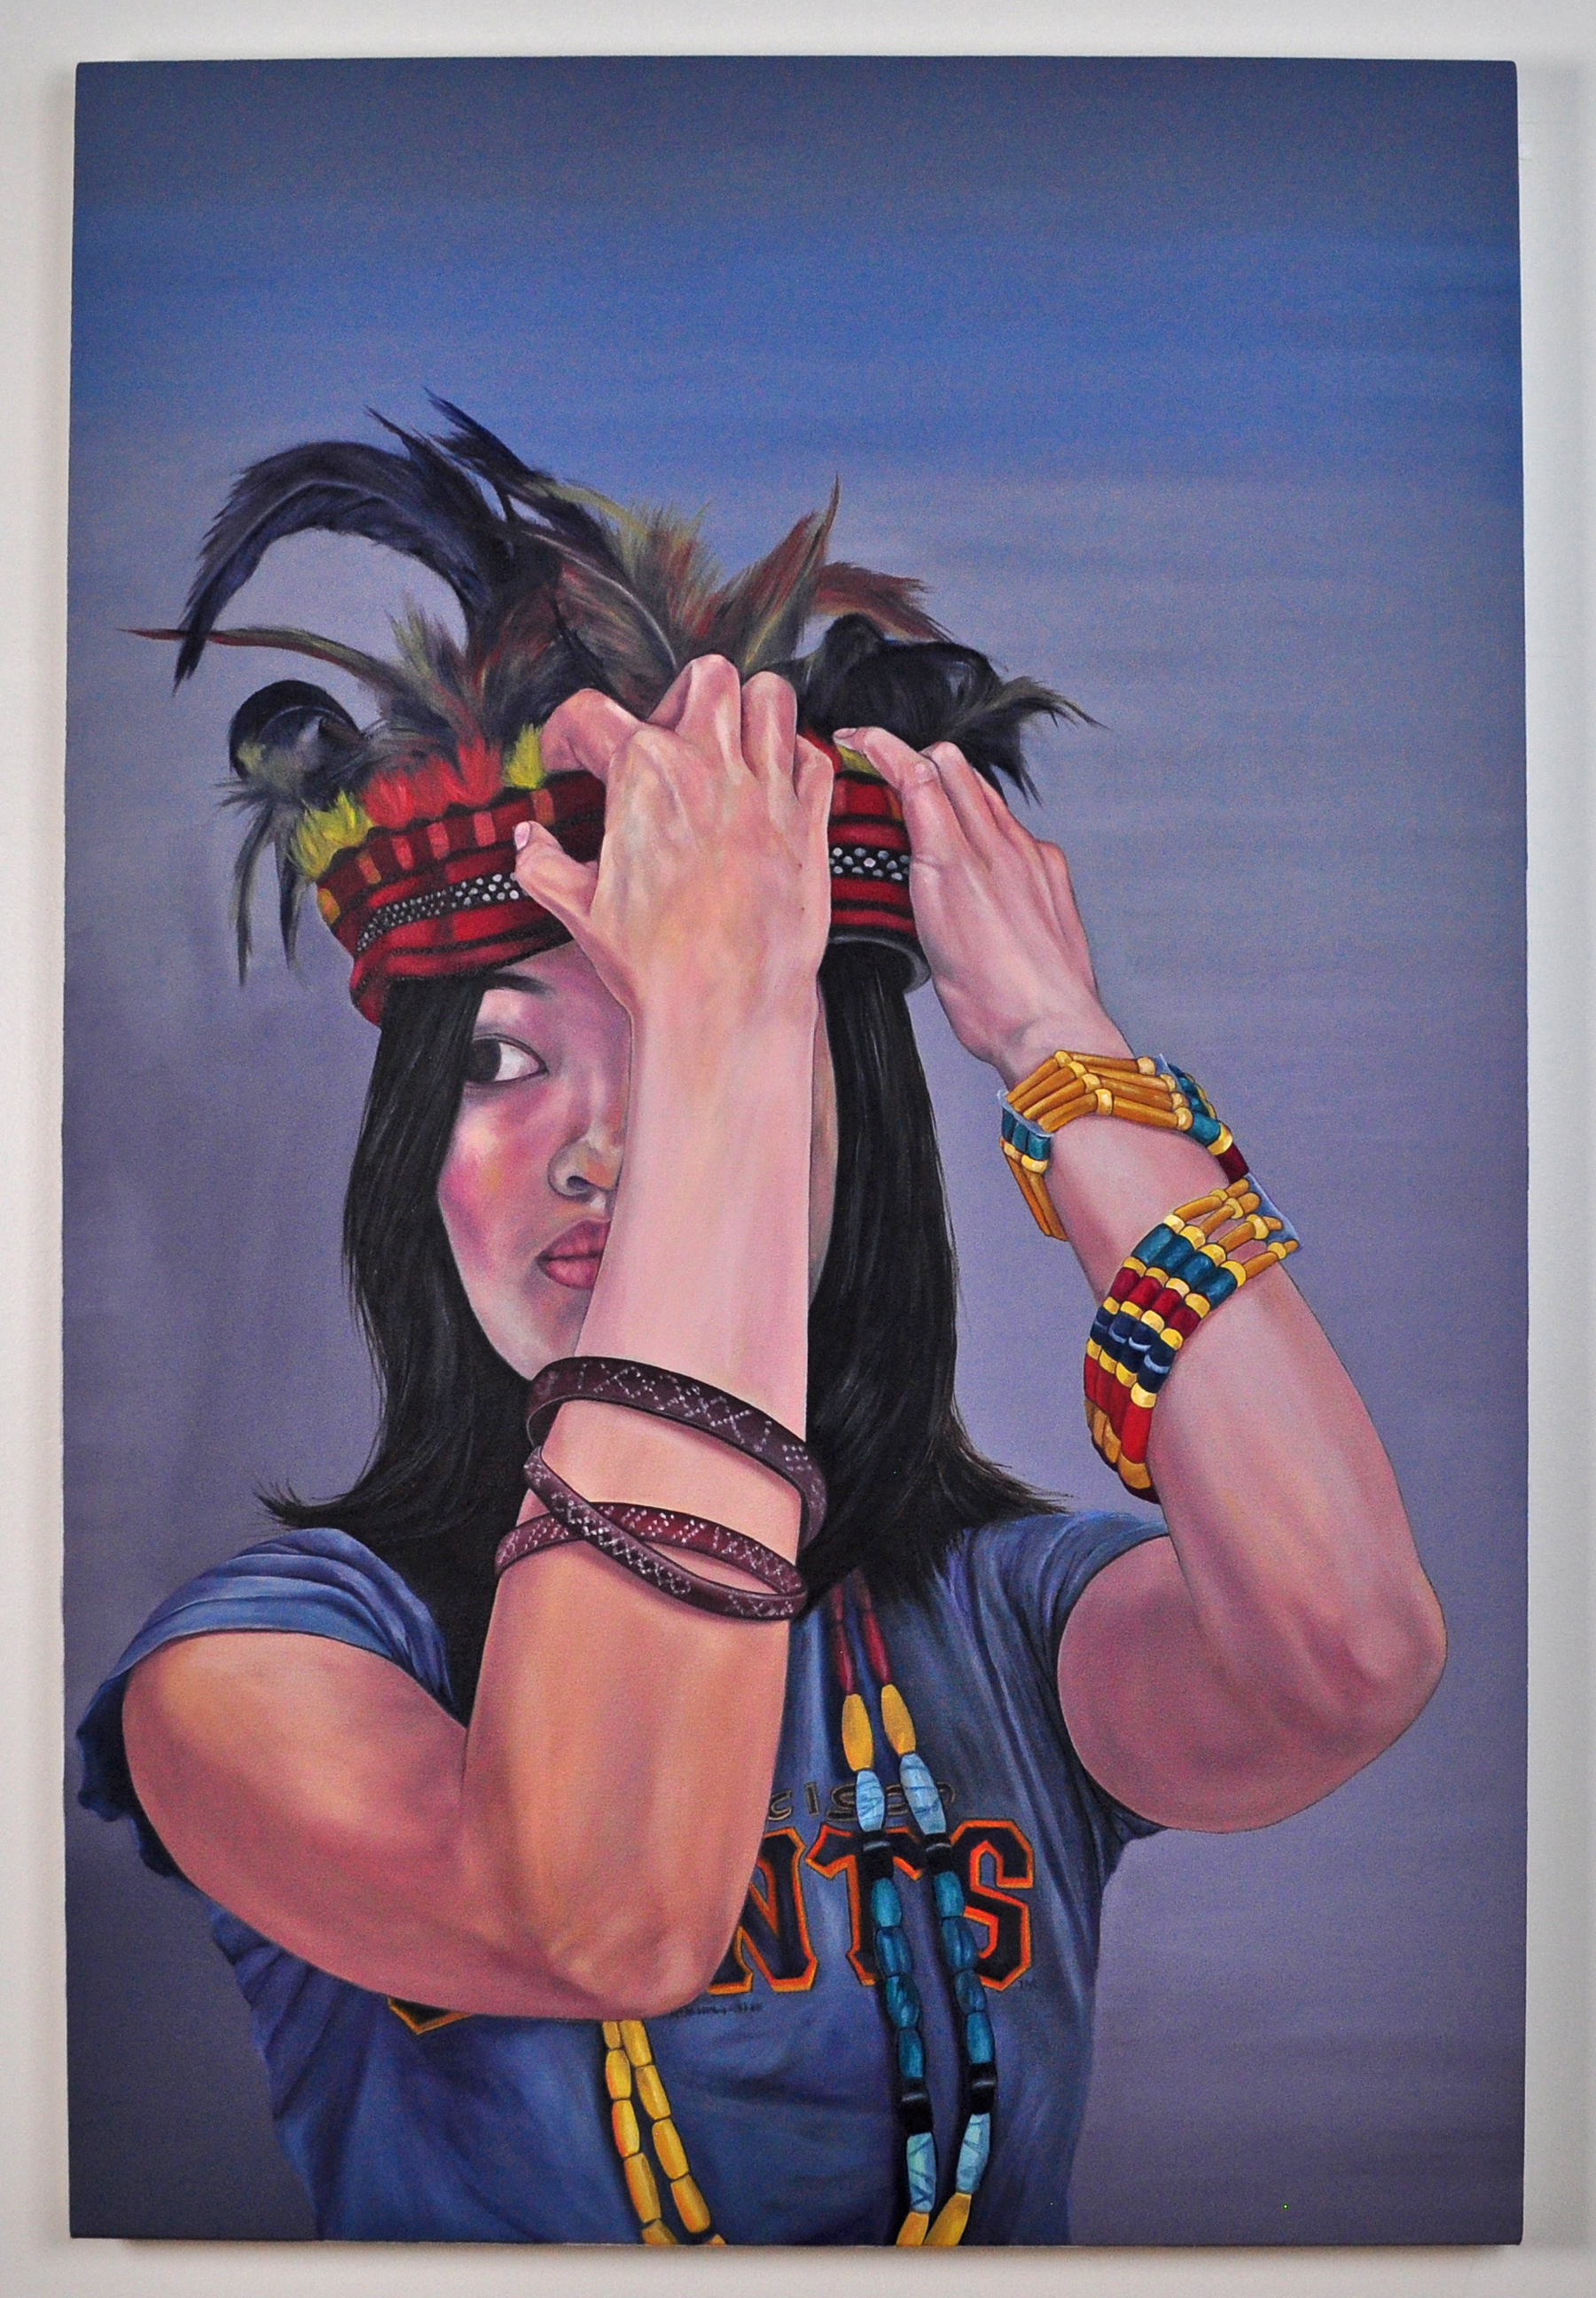   Self Fitting , 2010.&nbsp;Oil on canvas over panel, 48" x 32" (Photo: Ramon Pintado) 